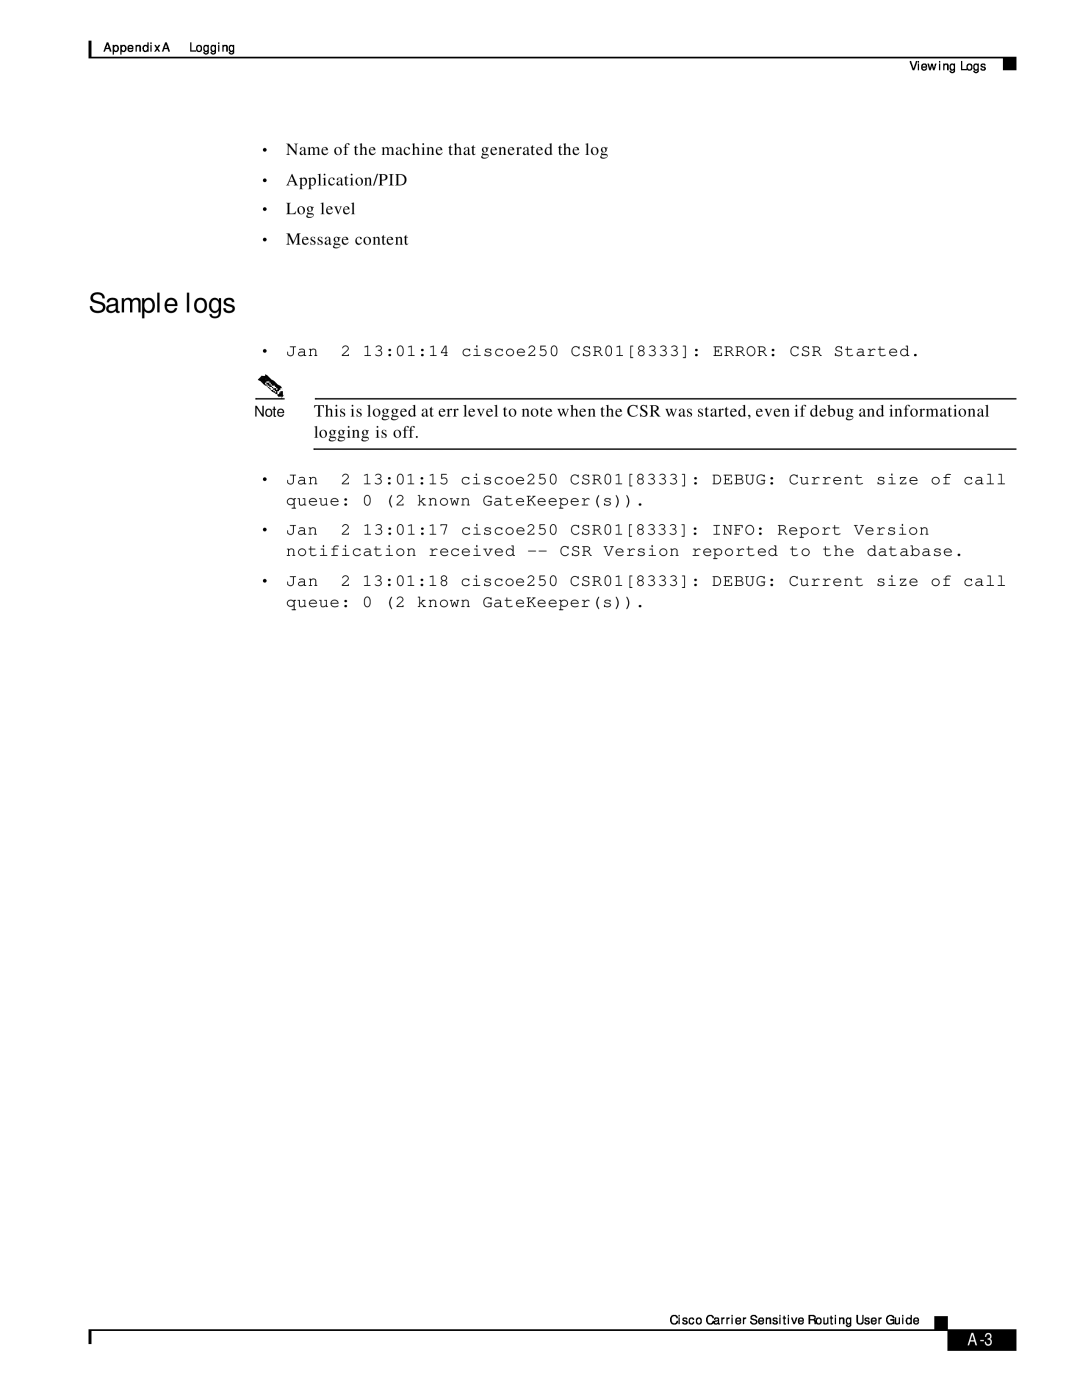 Cisco Systems Version 1.1 manual Sample logs 